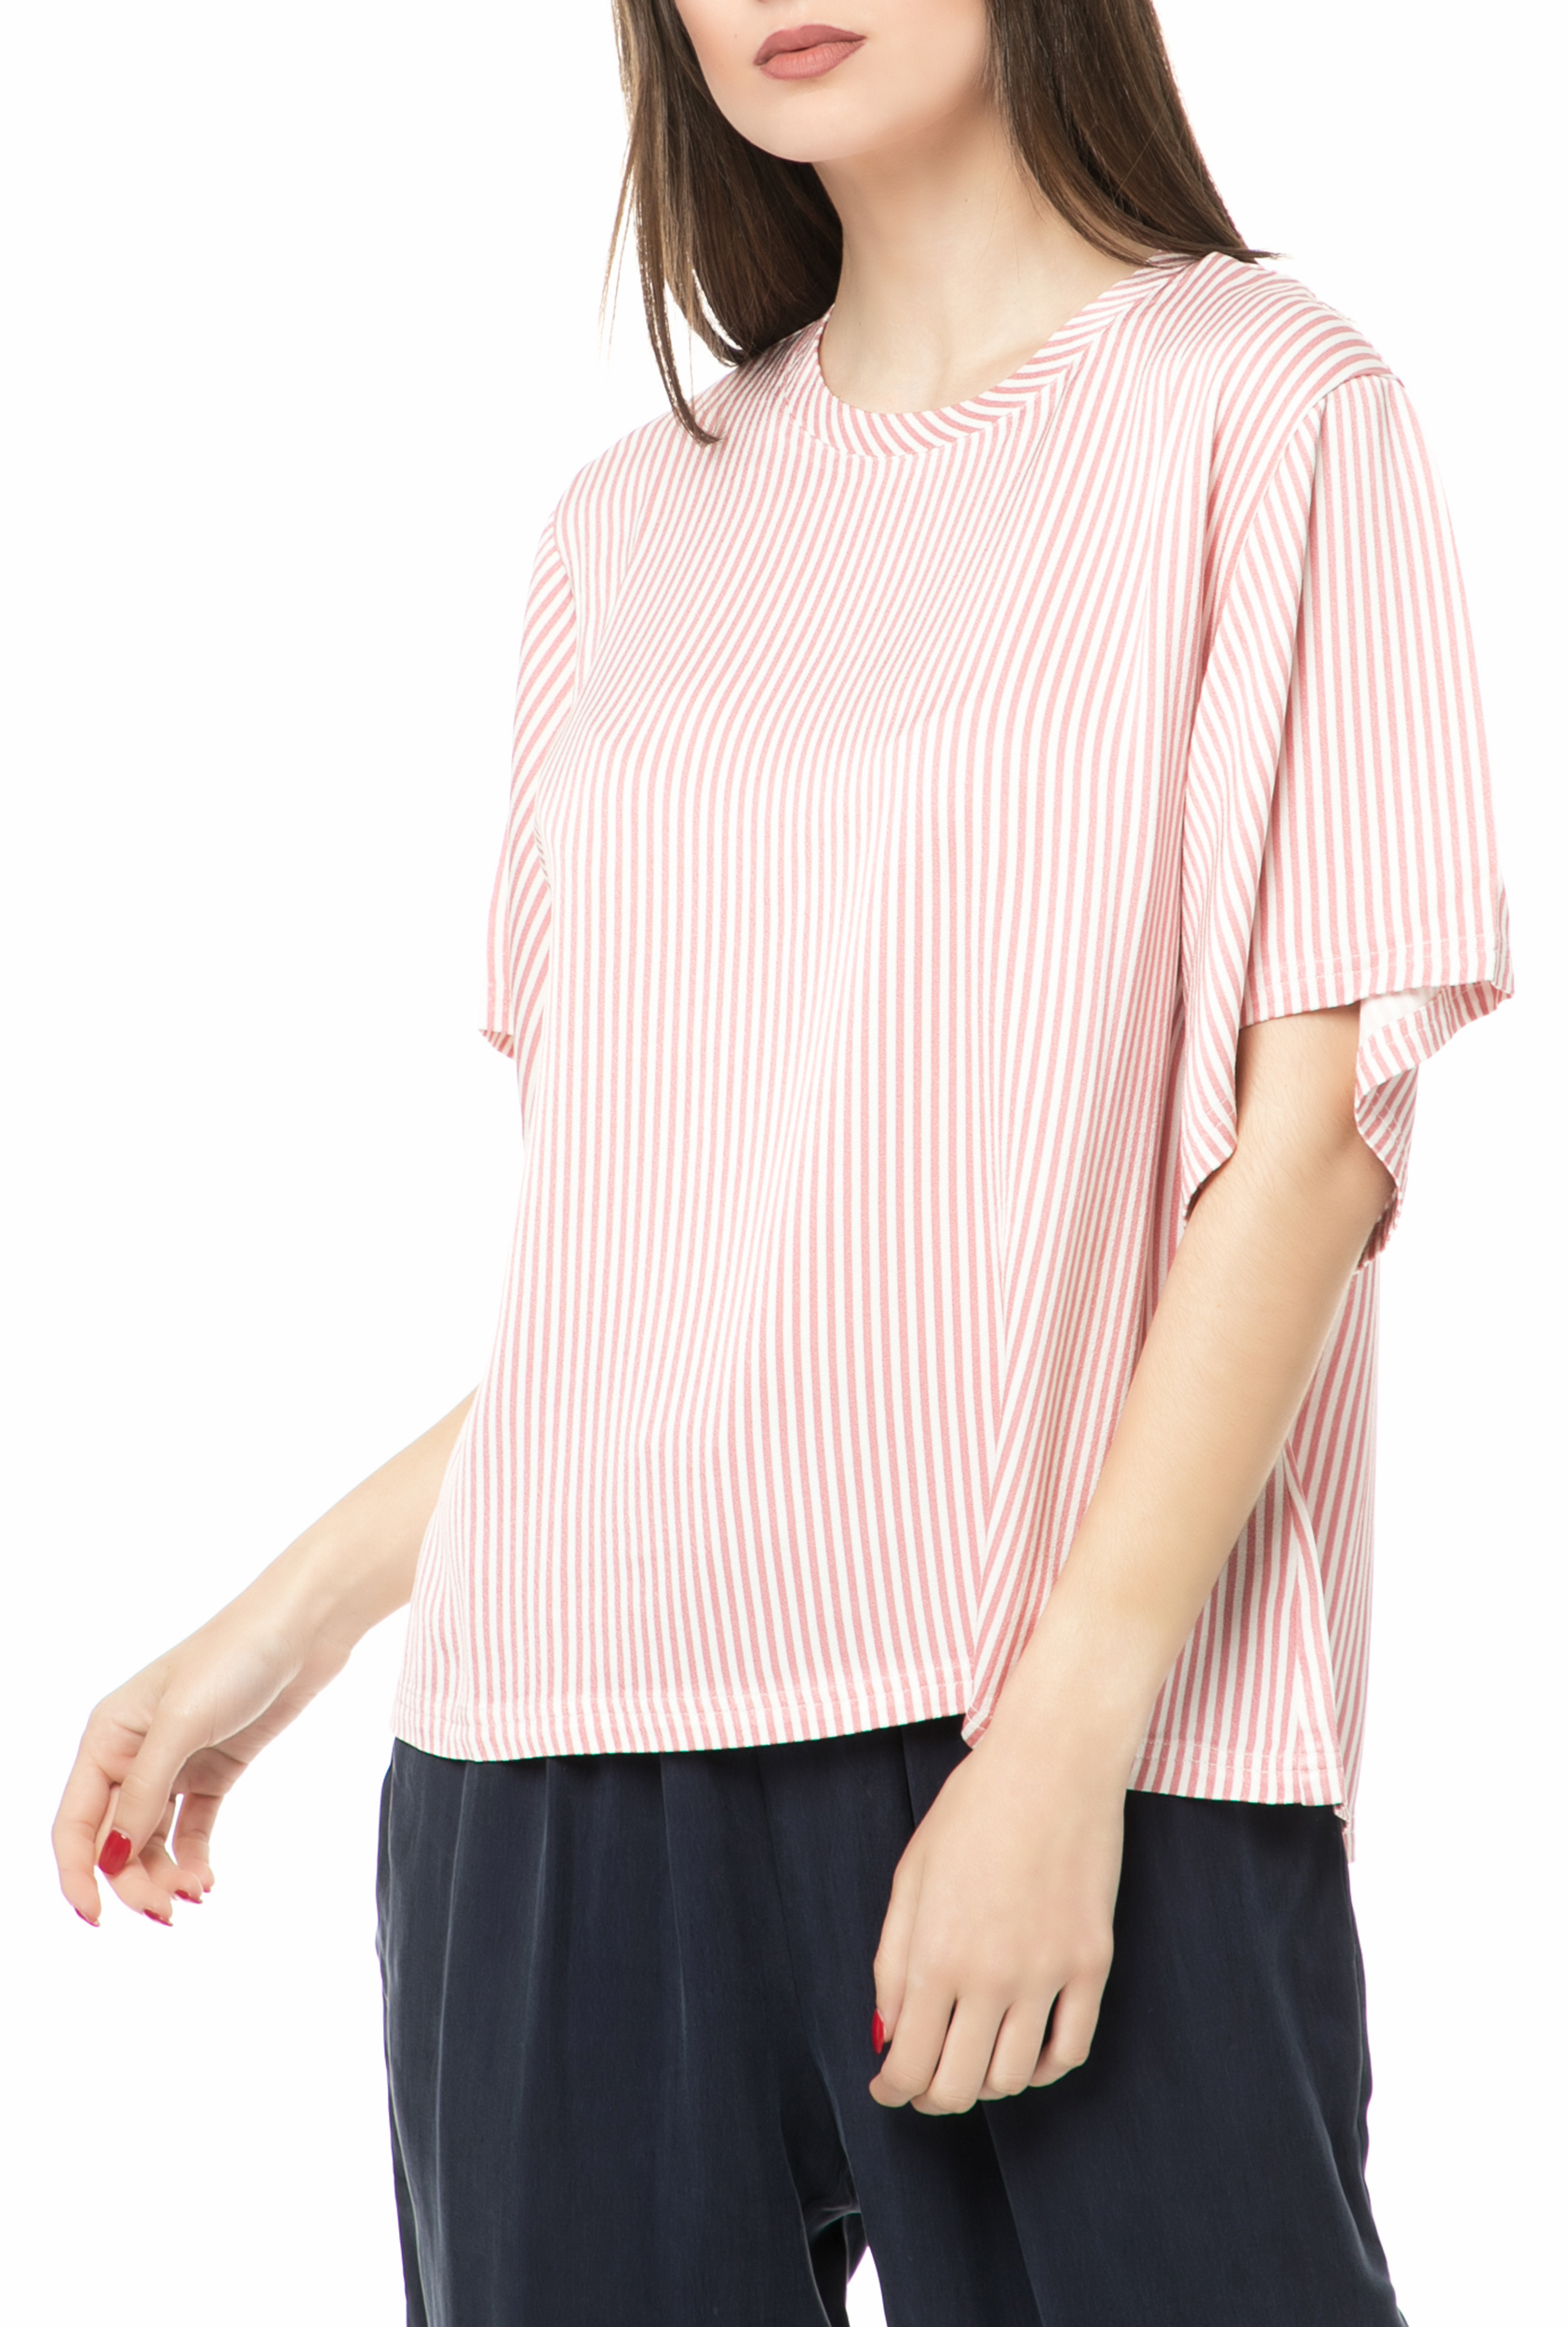 AMERICAN VINTAGE – Γυναικεία κοντομάνικη μπλούζα ARI143IE18 AMERICAN VINTAGE ριγέ